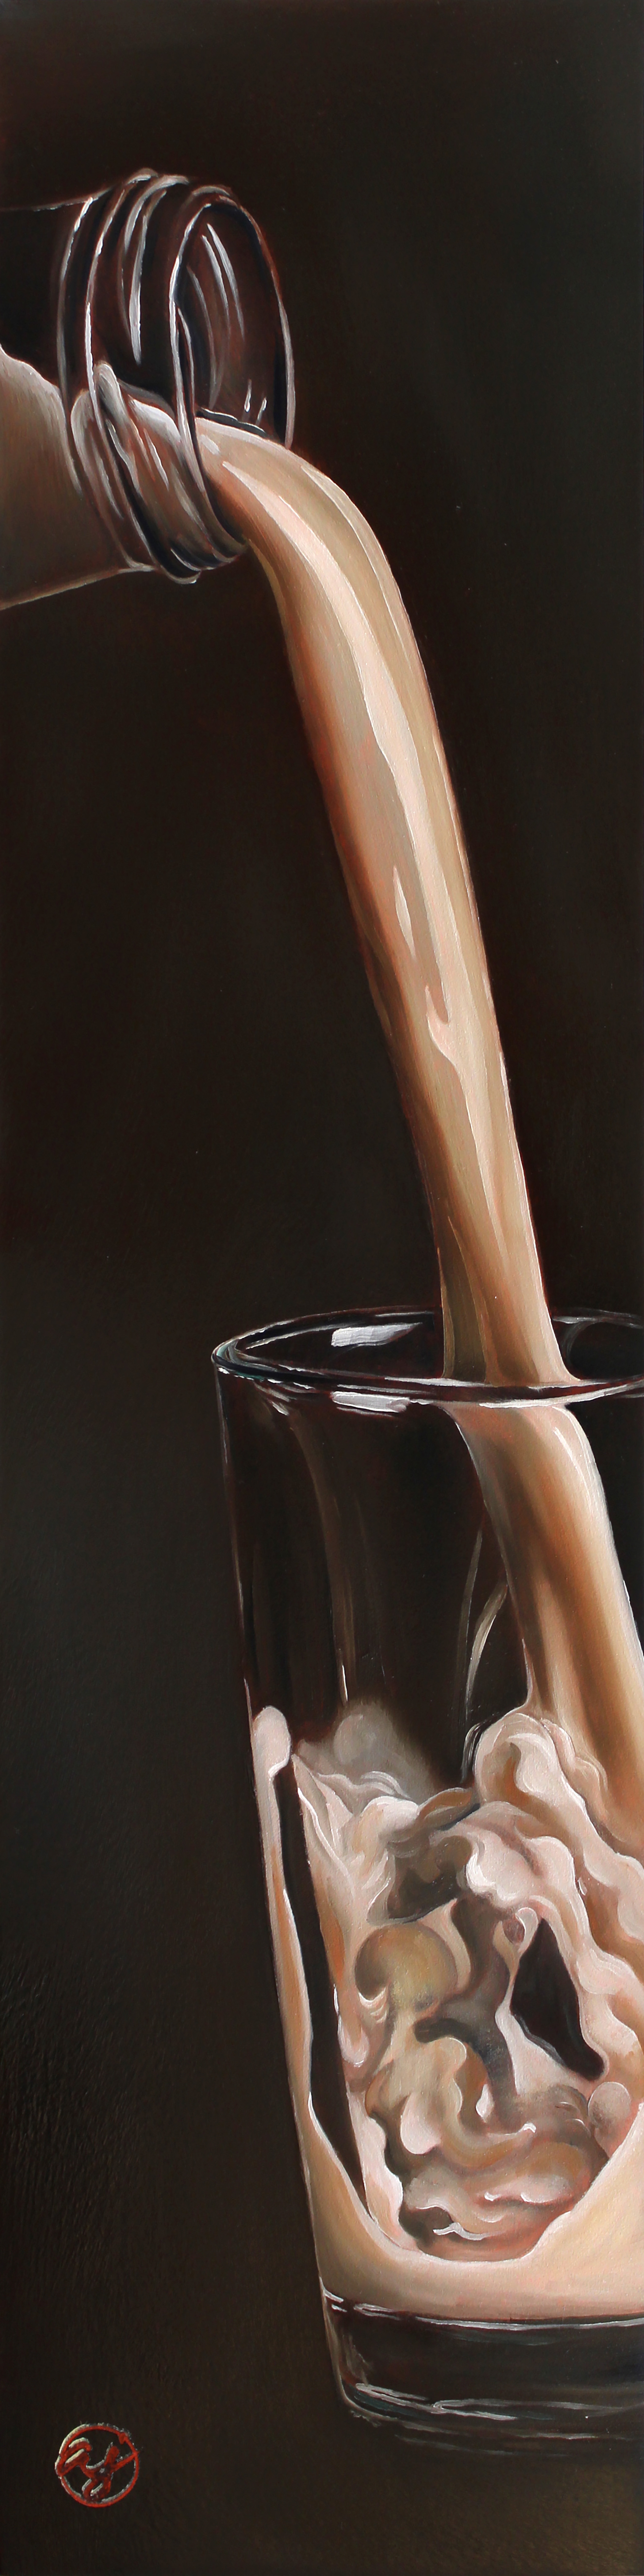 "Spilled Milk" 6x24" Original Oil Painting by Abra Johnson